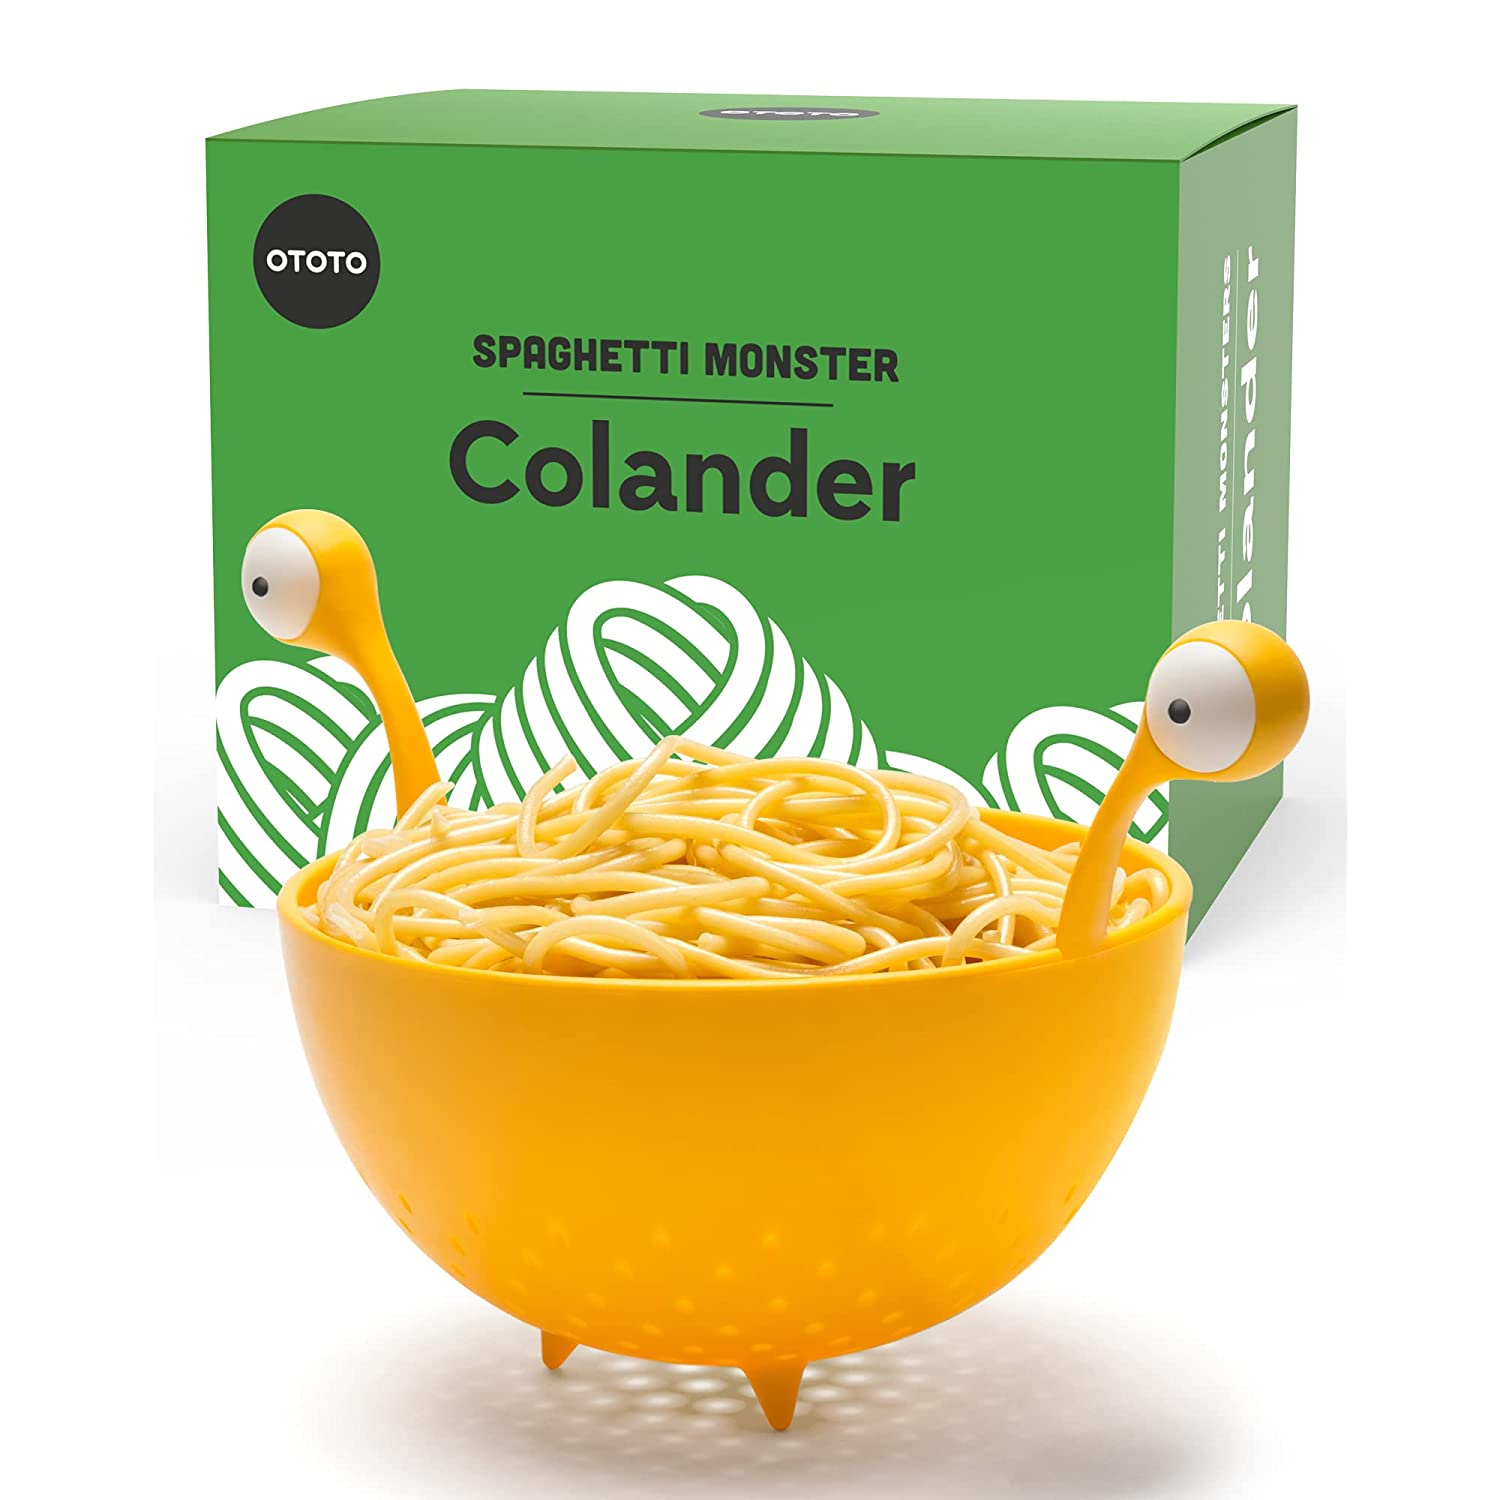 OTOTO Spaghetti Monster Colander Strainer Pasta Kitchen Gadget Design 8